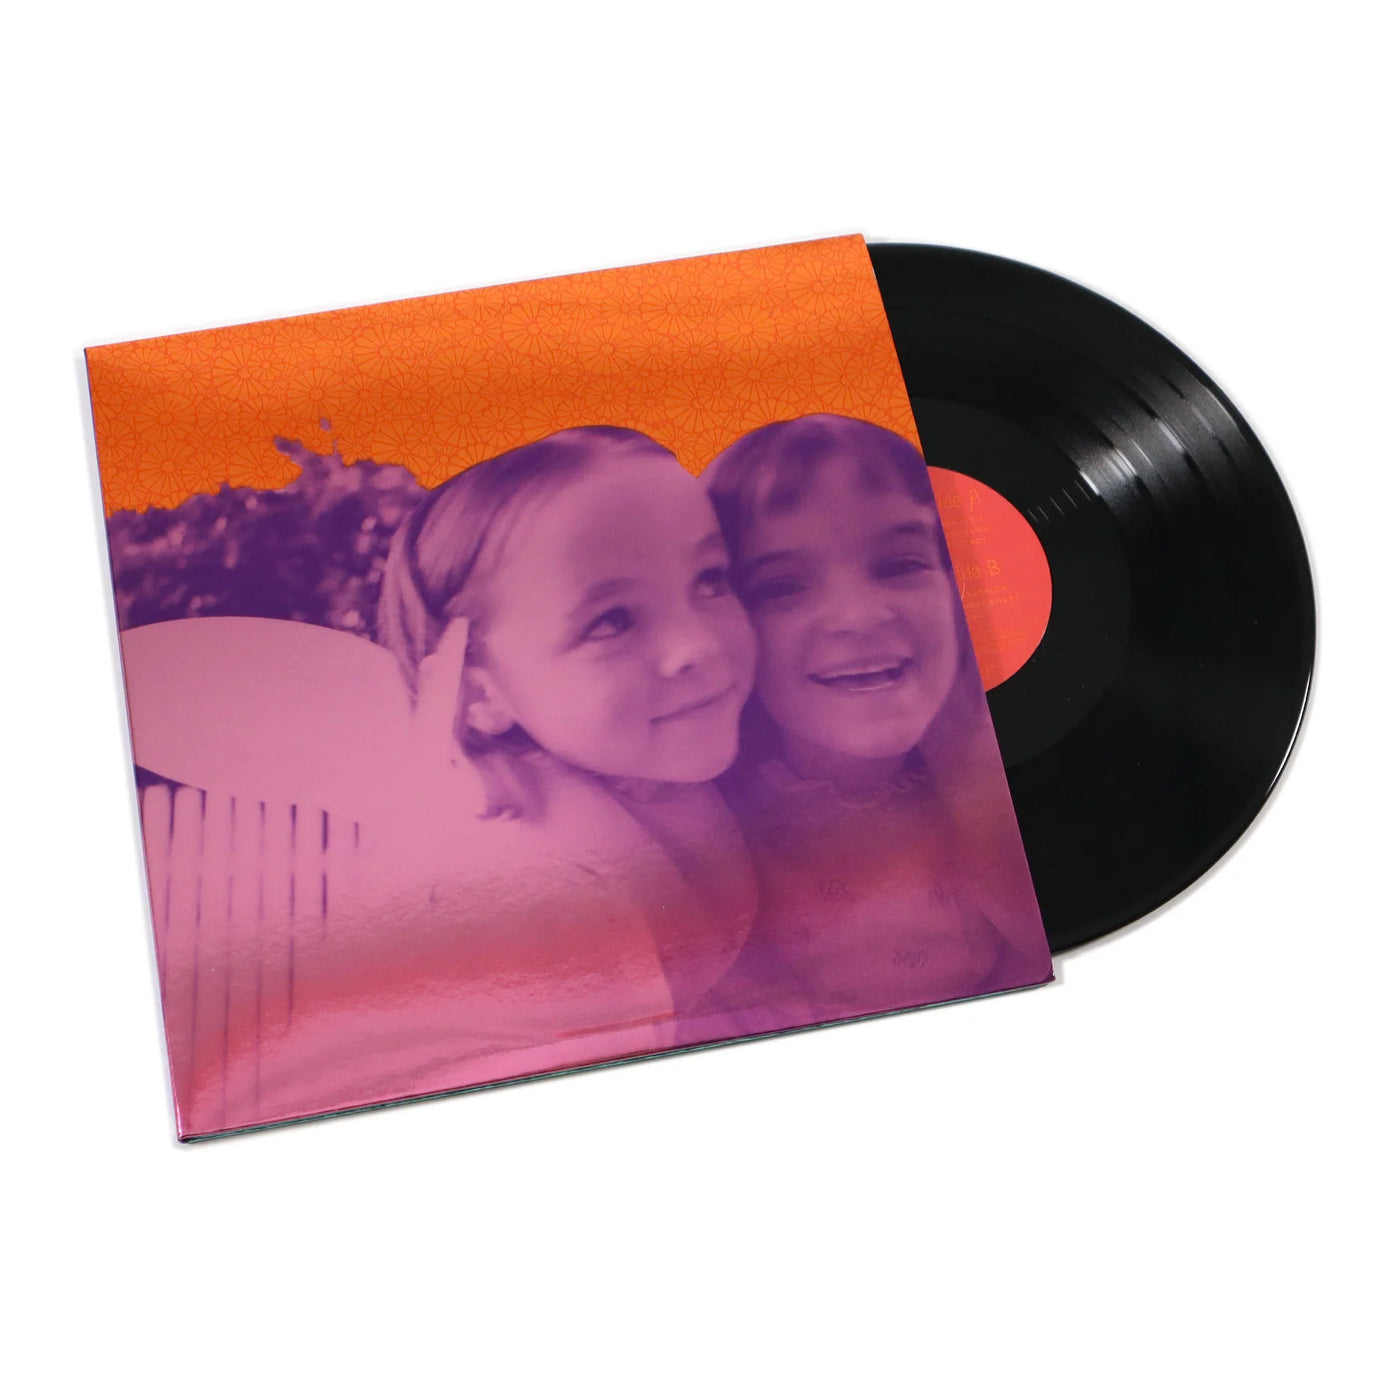 NEW/SEALED! Smashing Pumpkins - Siamese Dream (Remastered) (2 Lp's)